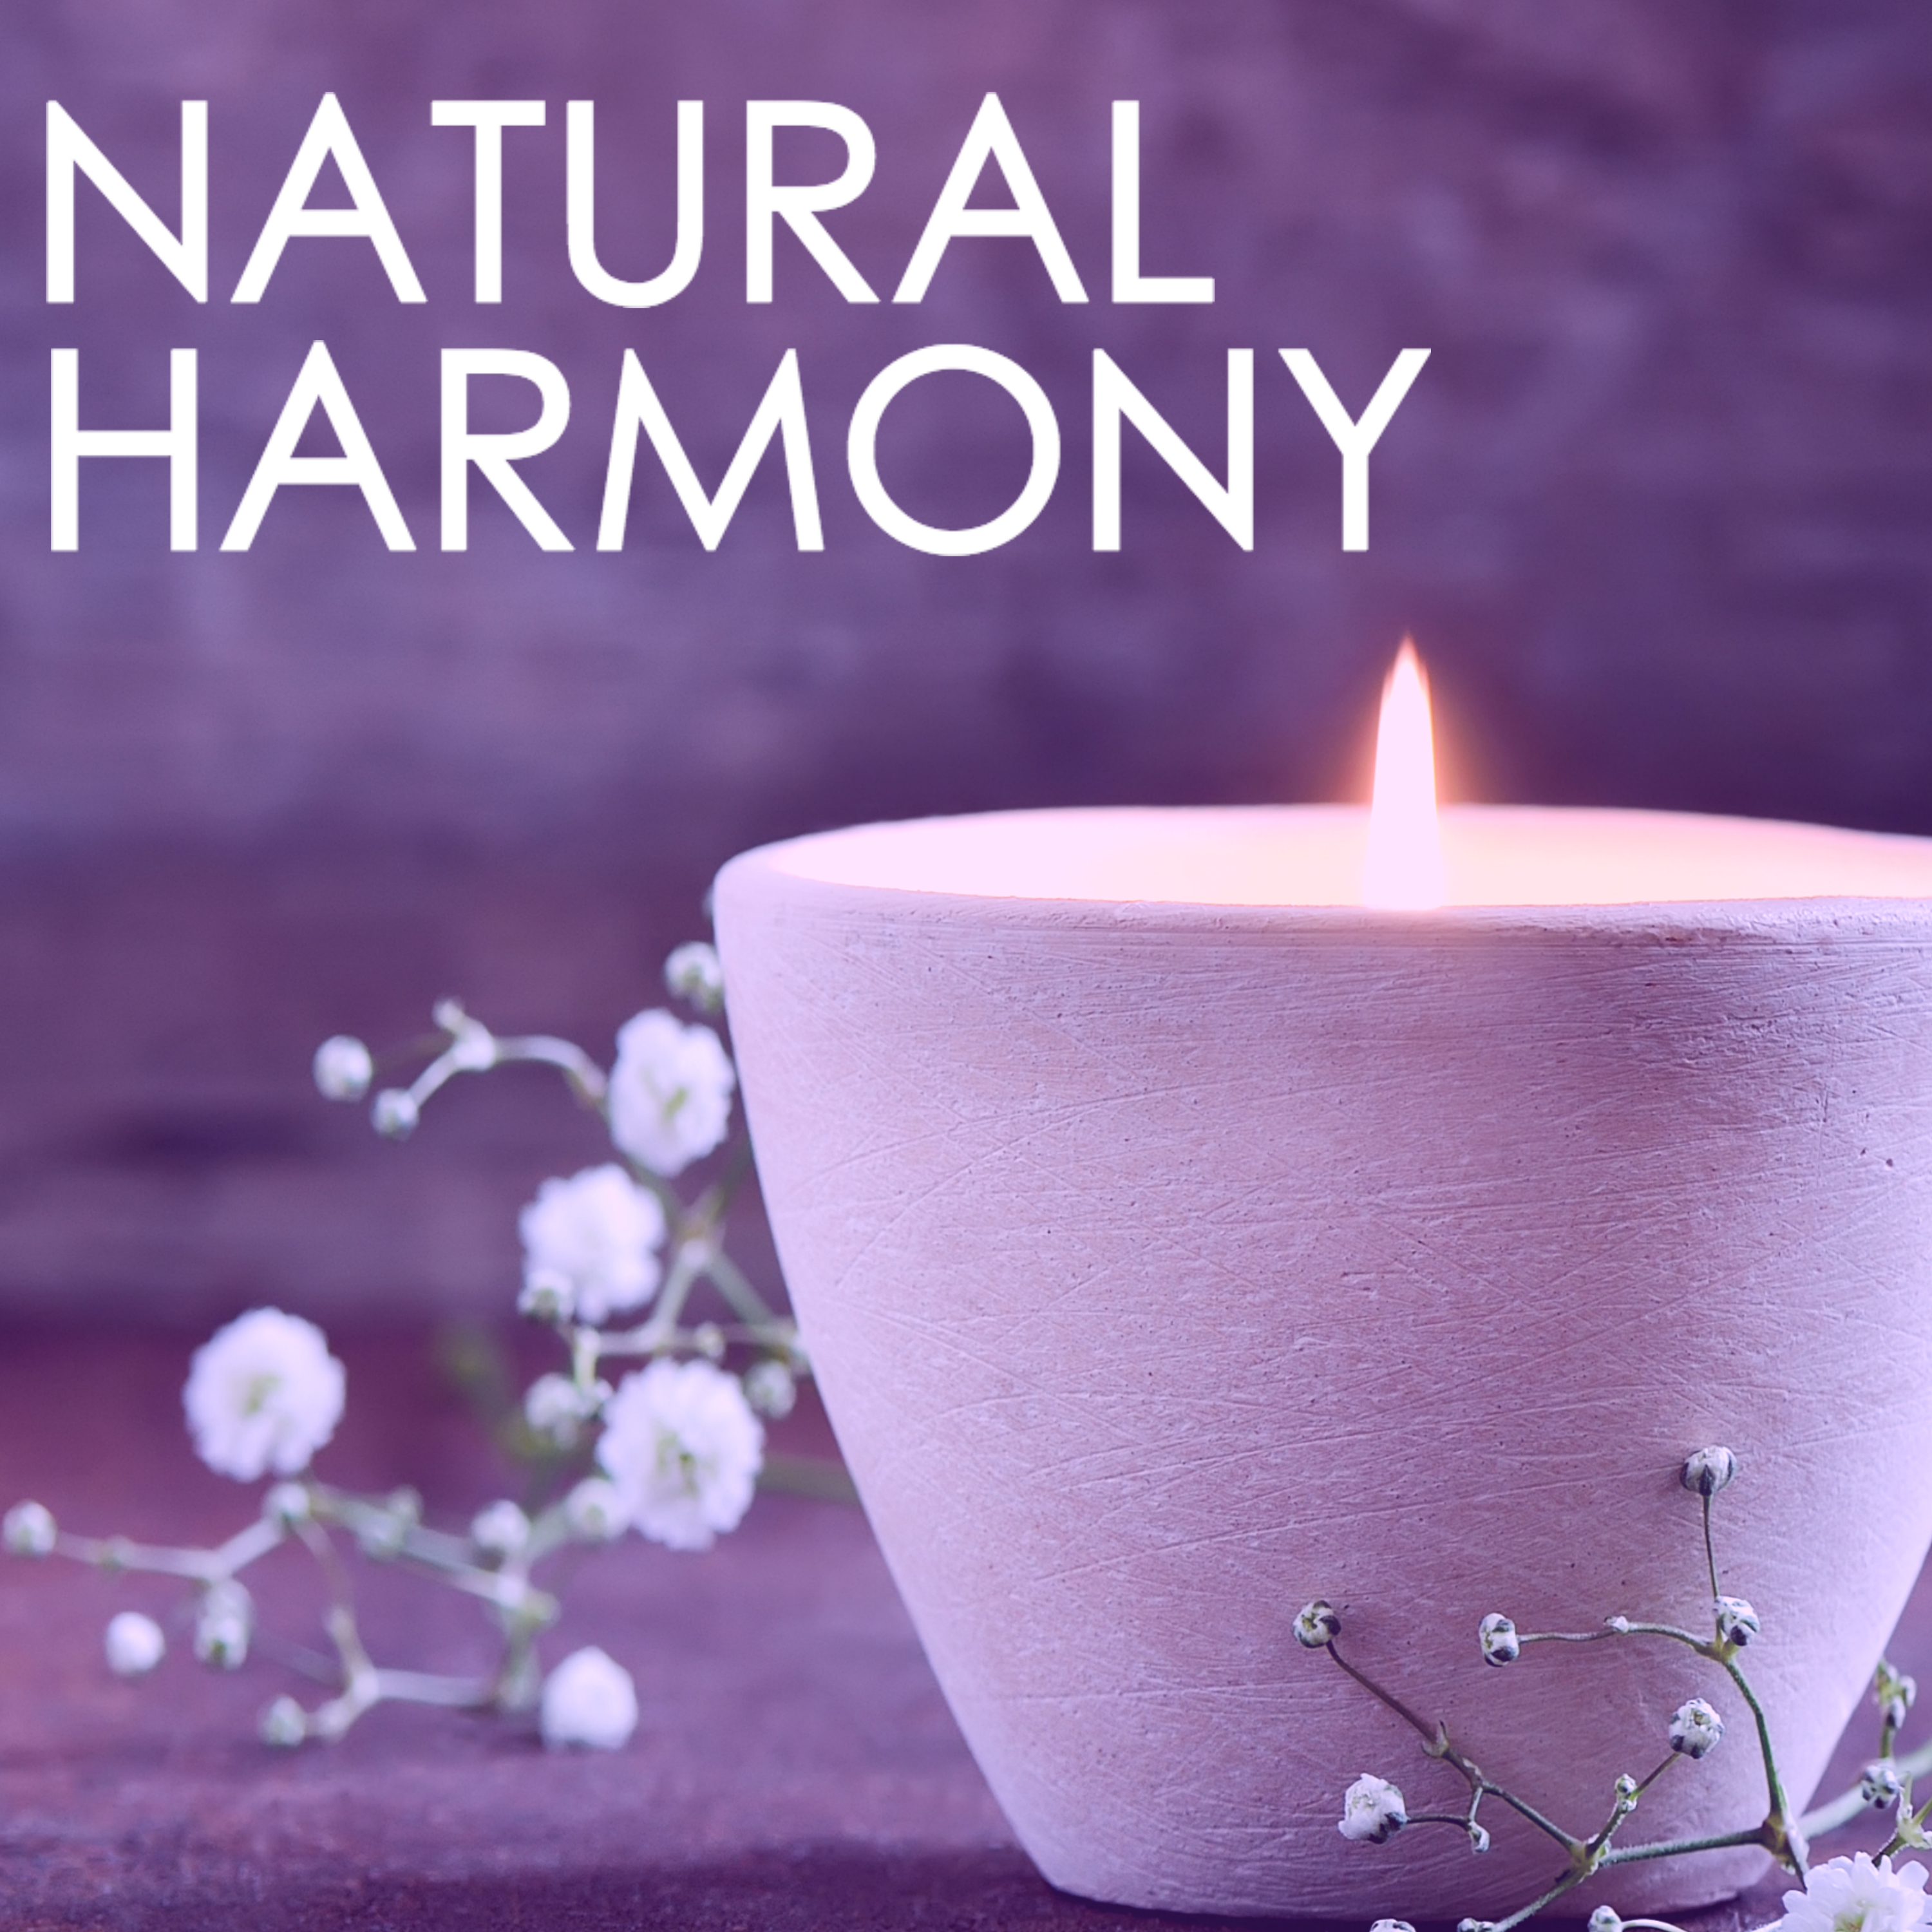 Natural Harmony - Chakra Balancing, New Age Songs and Music for Spirituality